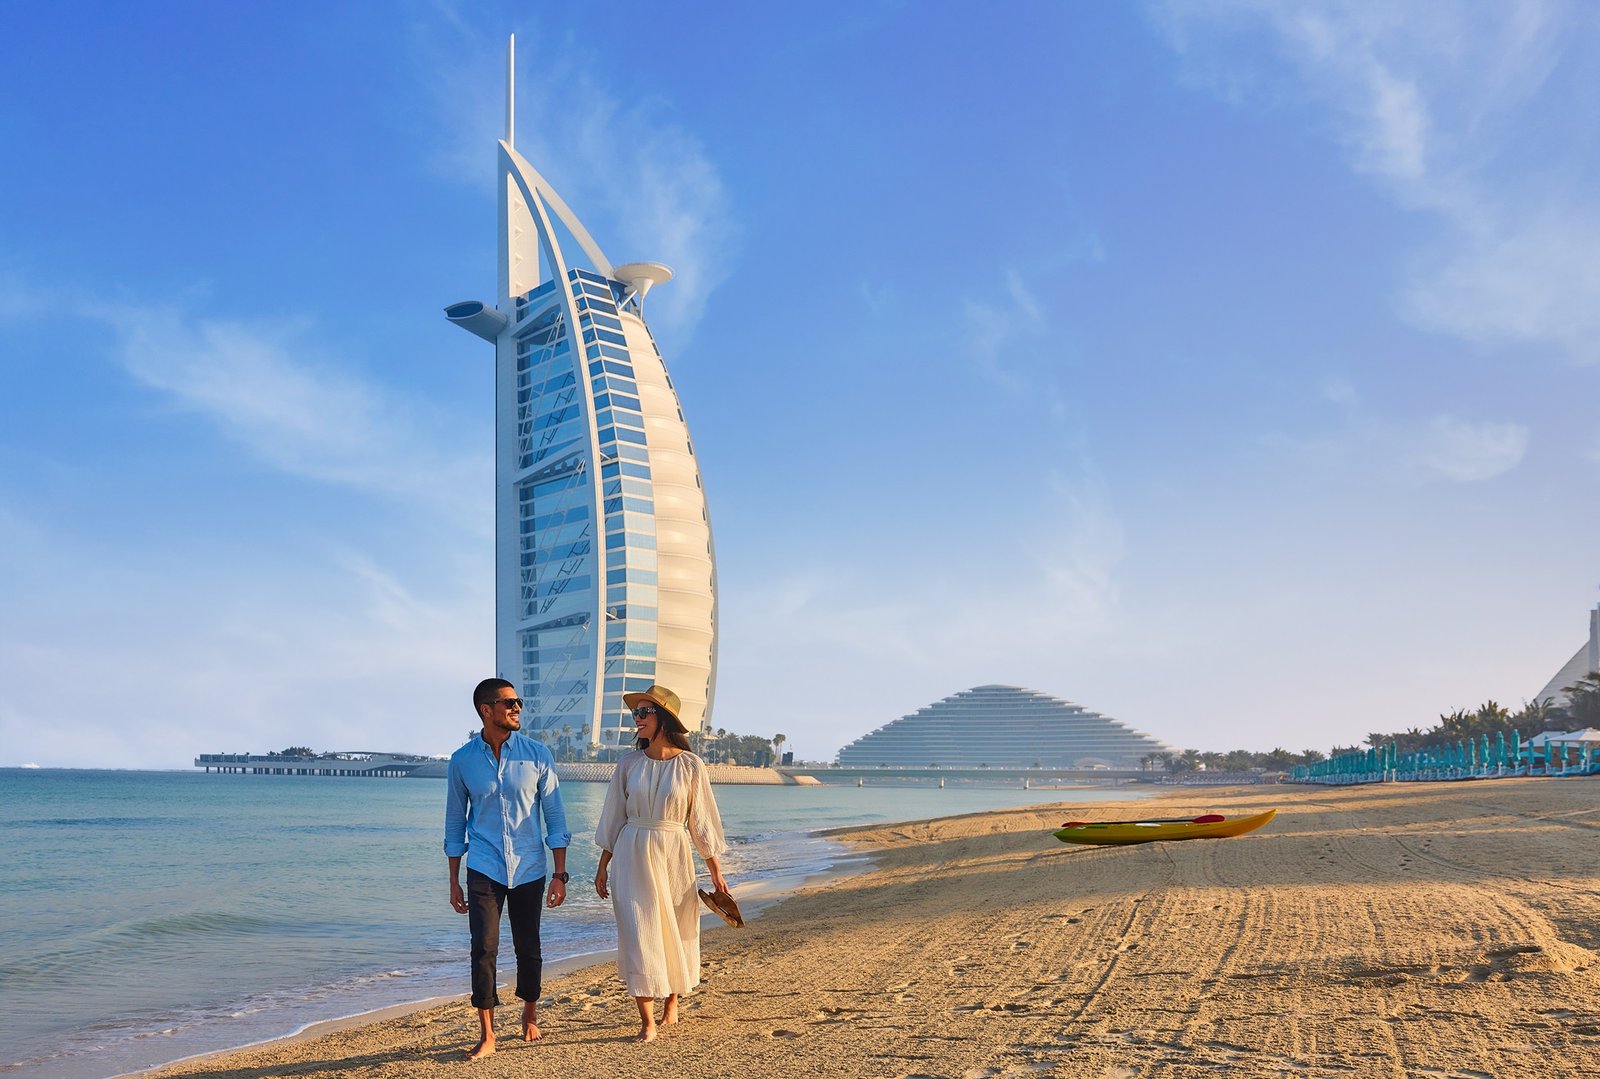 Dubai named ‘No.1 global destination’ in Tripadvisor Travellers’ Choice Awards for the third consecutive year